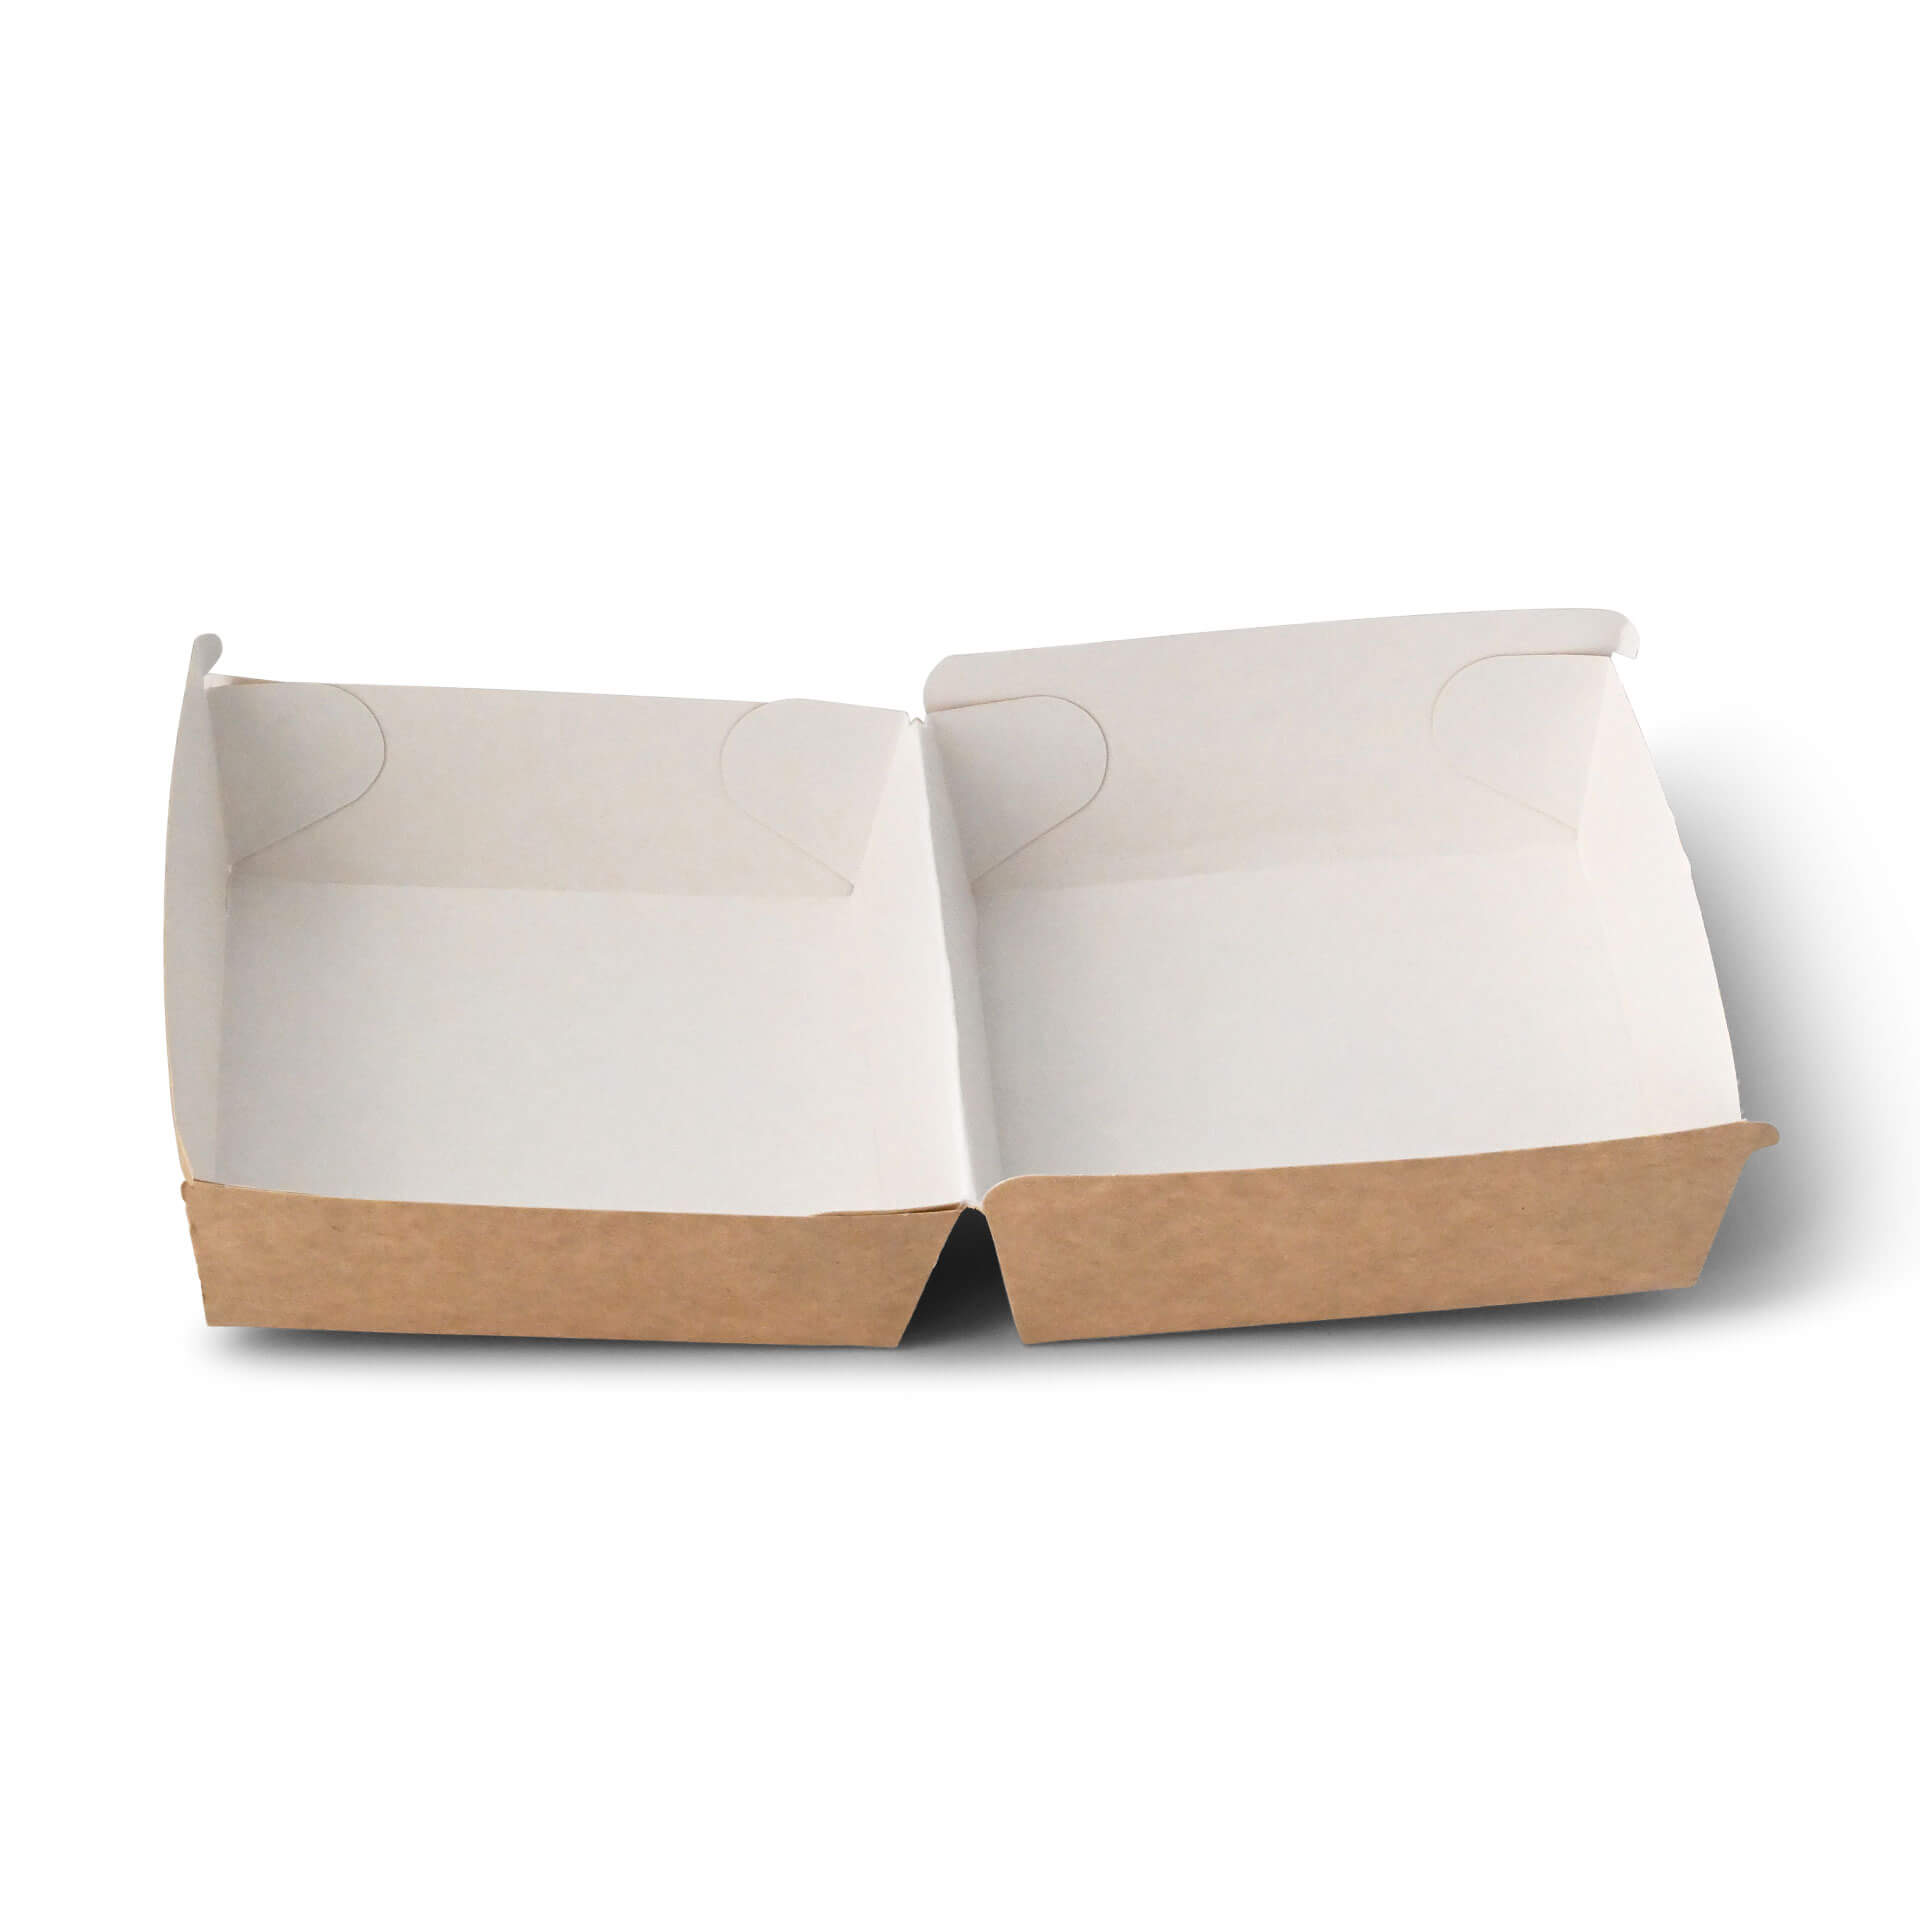 Take-away-Burger-Boxen 11 x 11 x 8 cm, braun-weiß